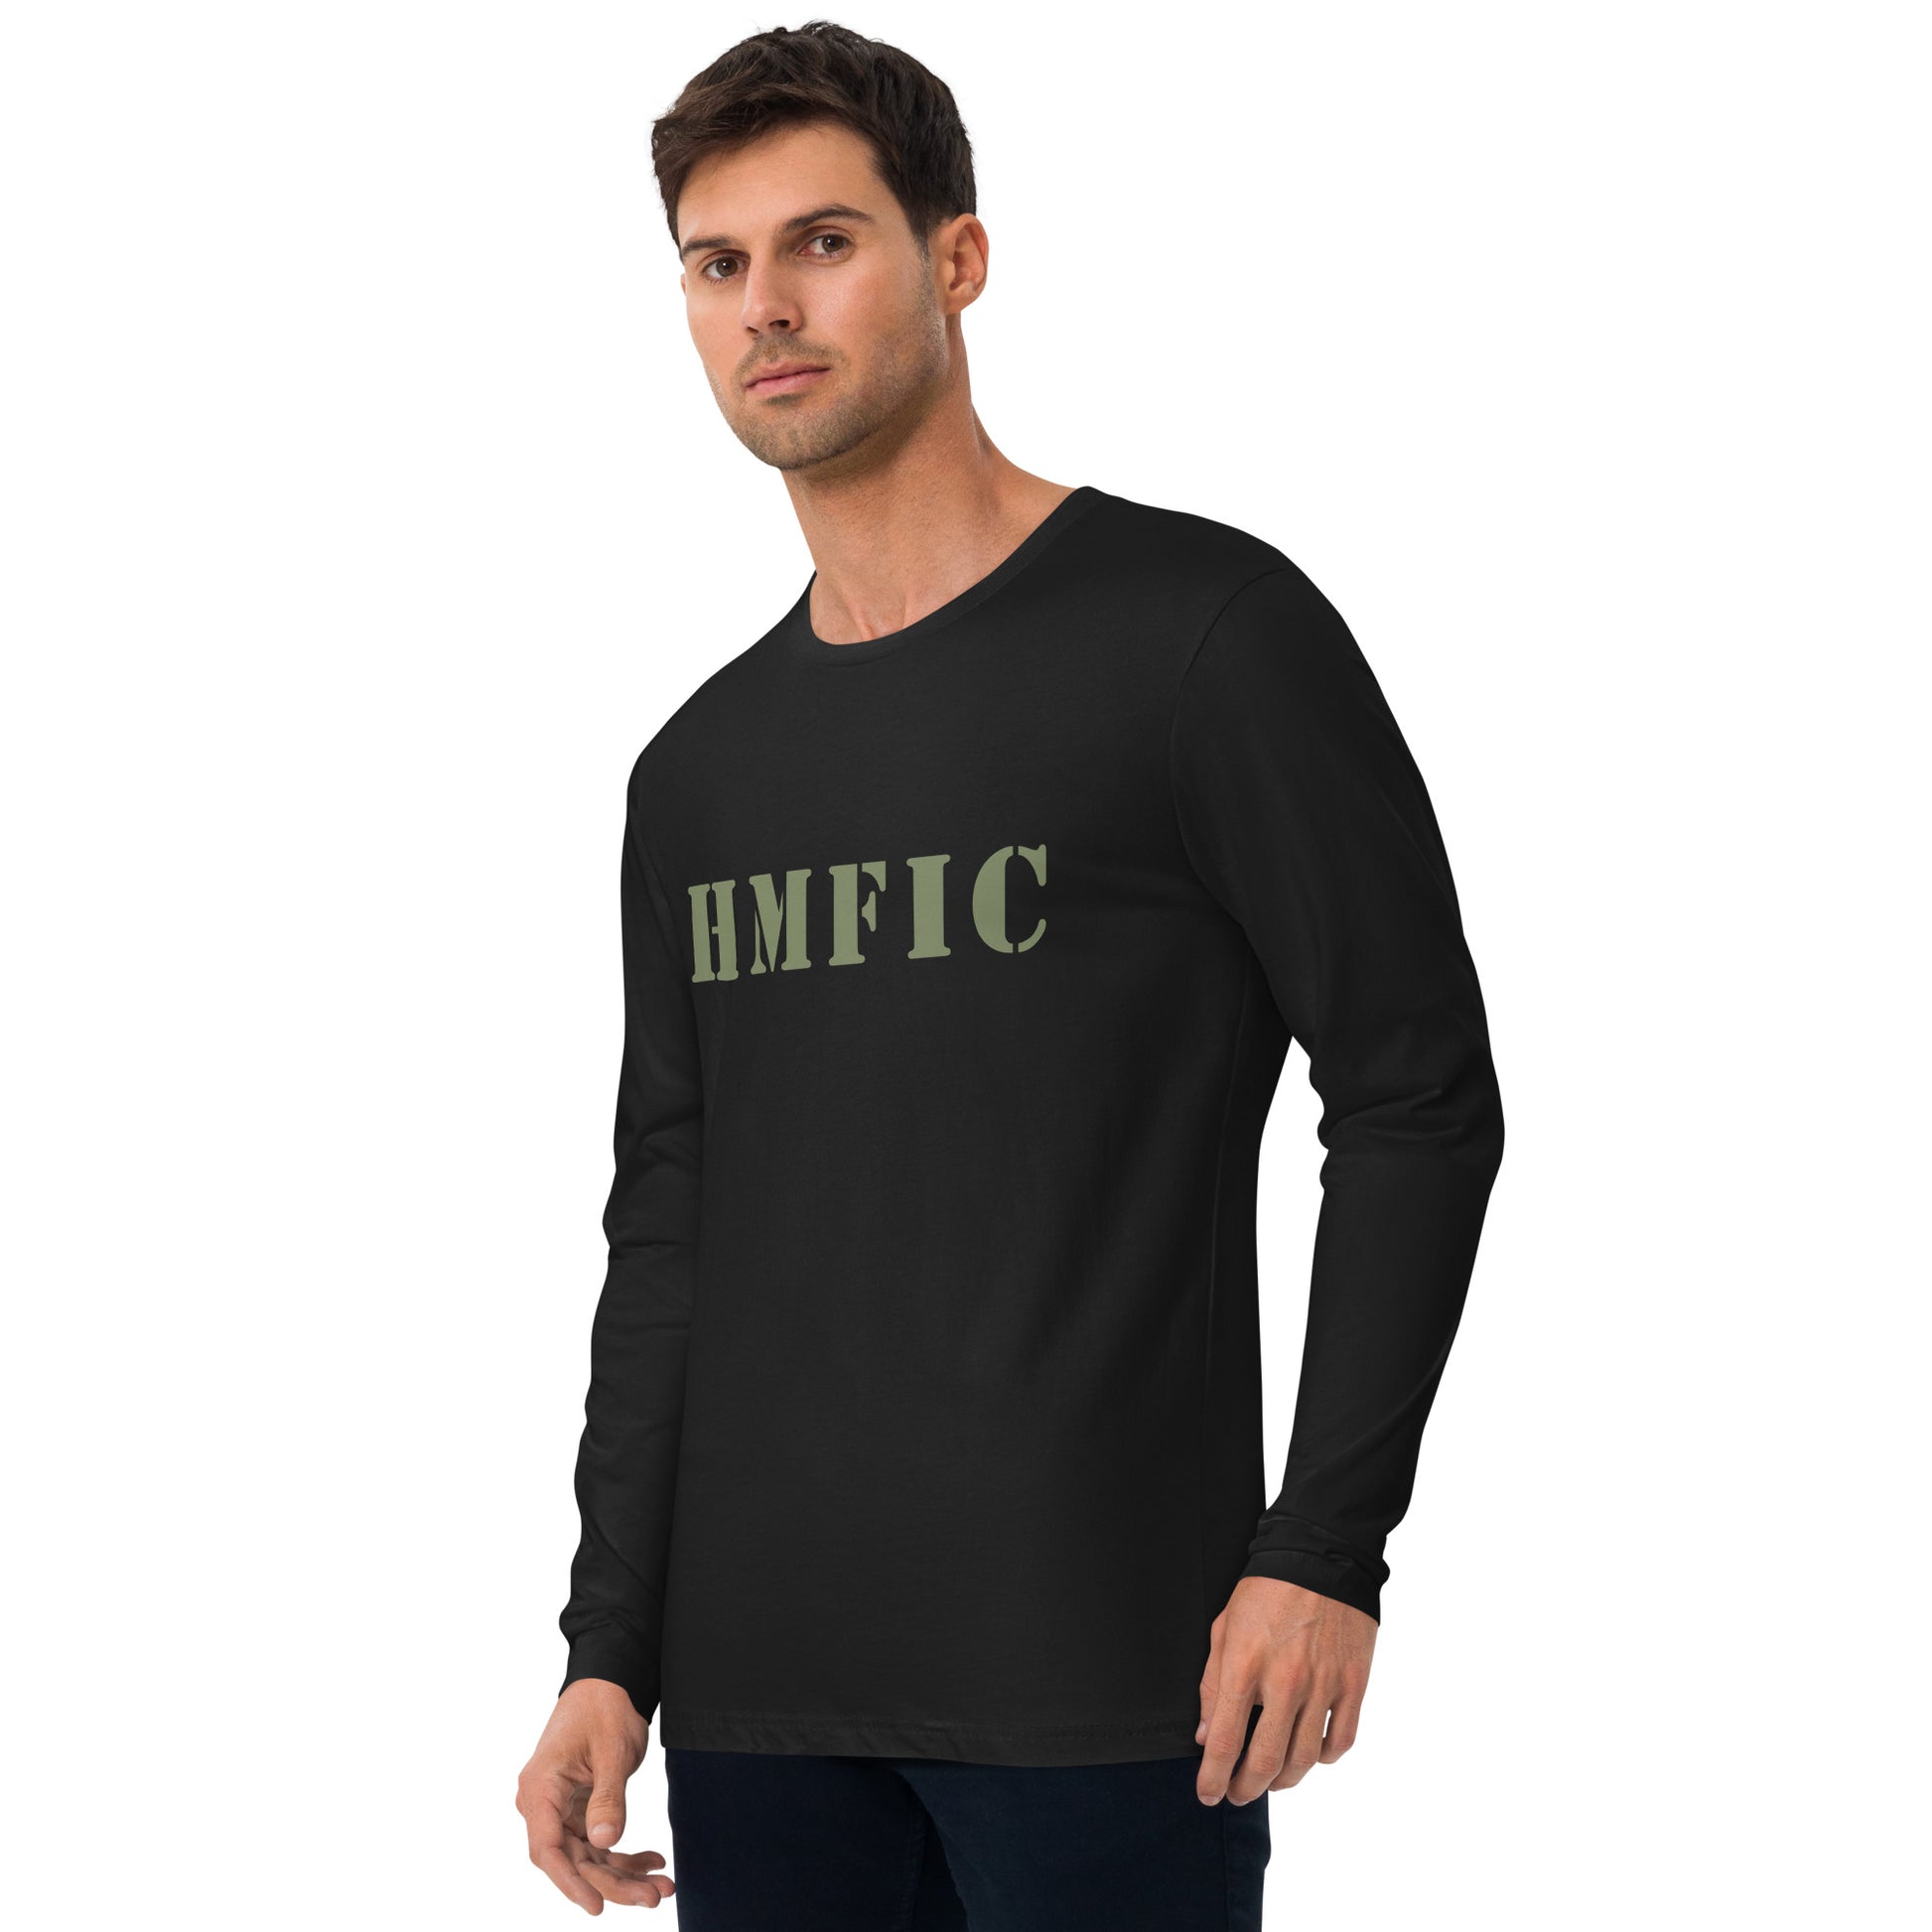 Men's Long Sleeve Crew Shirt - HMFIC - FAFO Sportswear